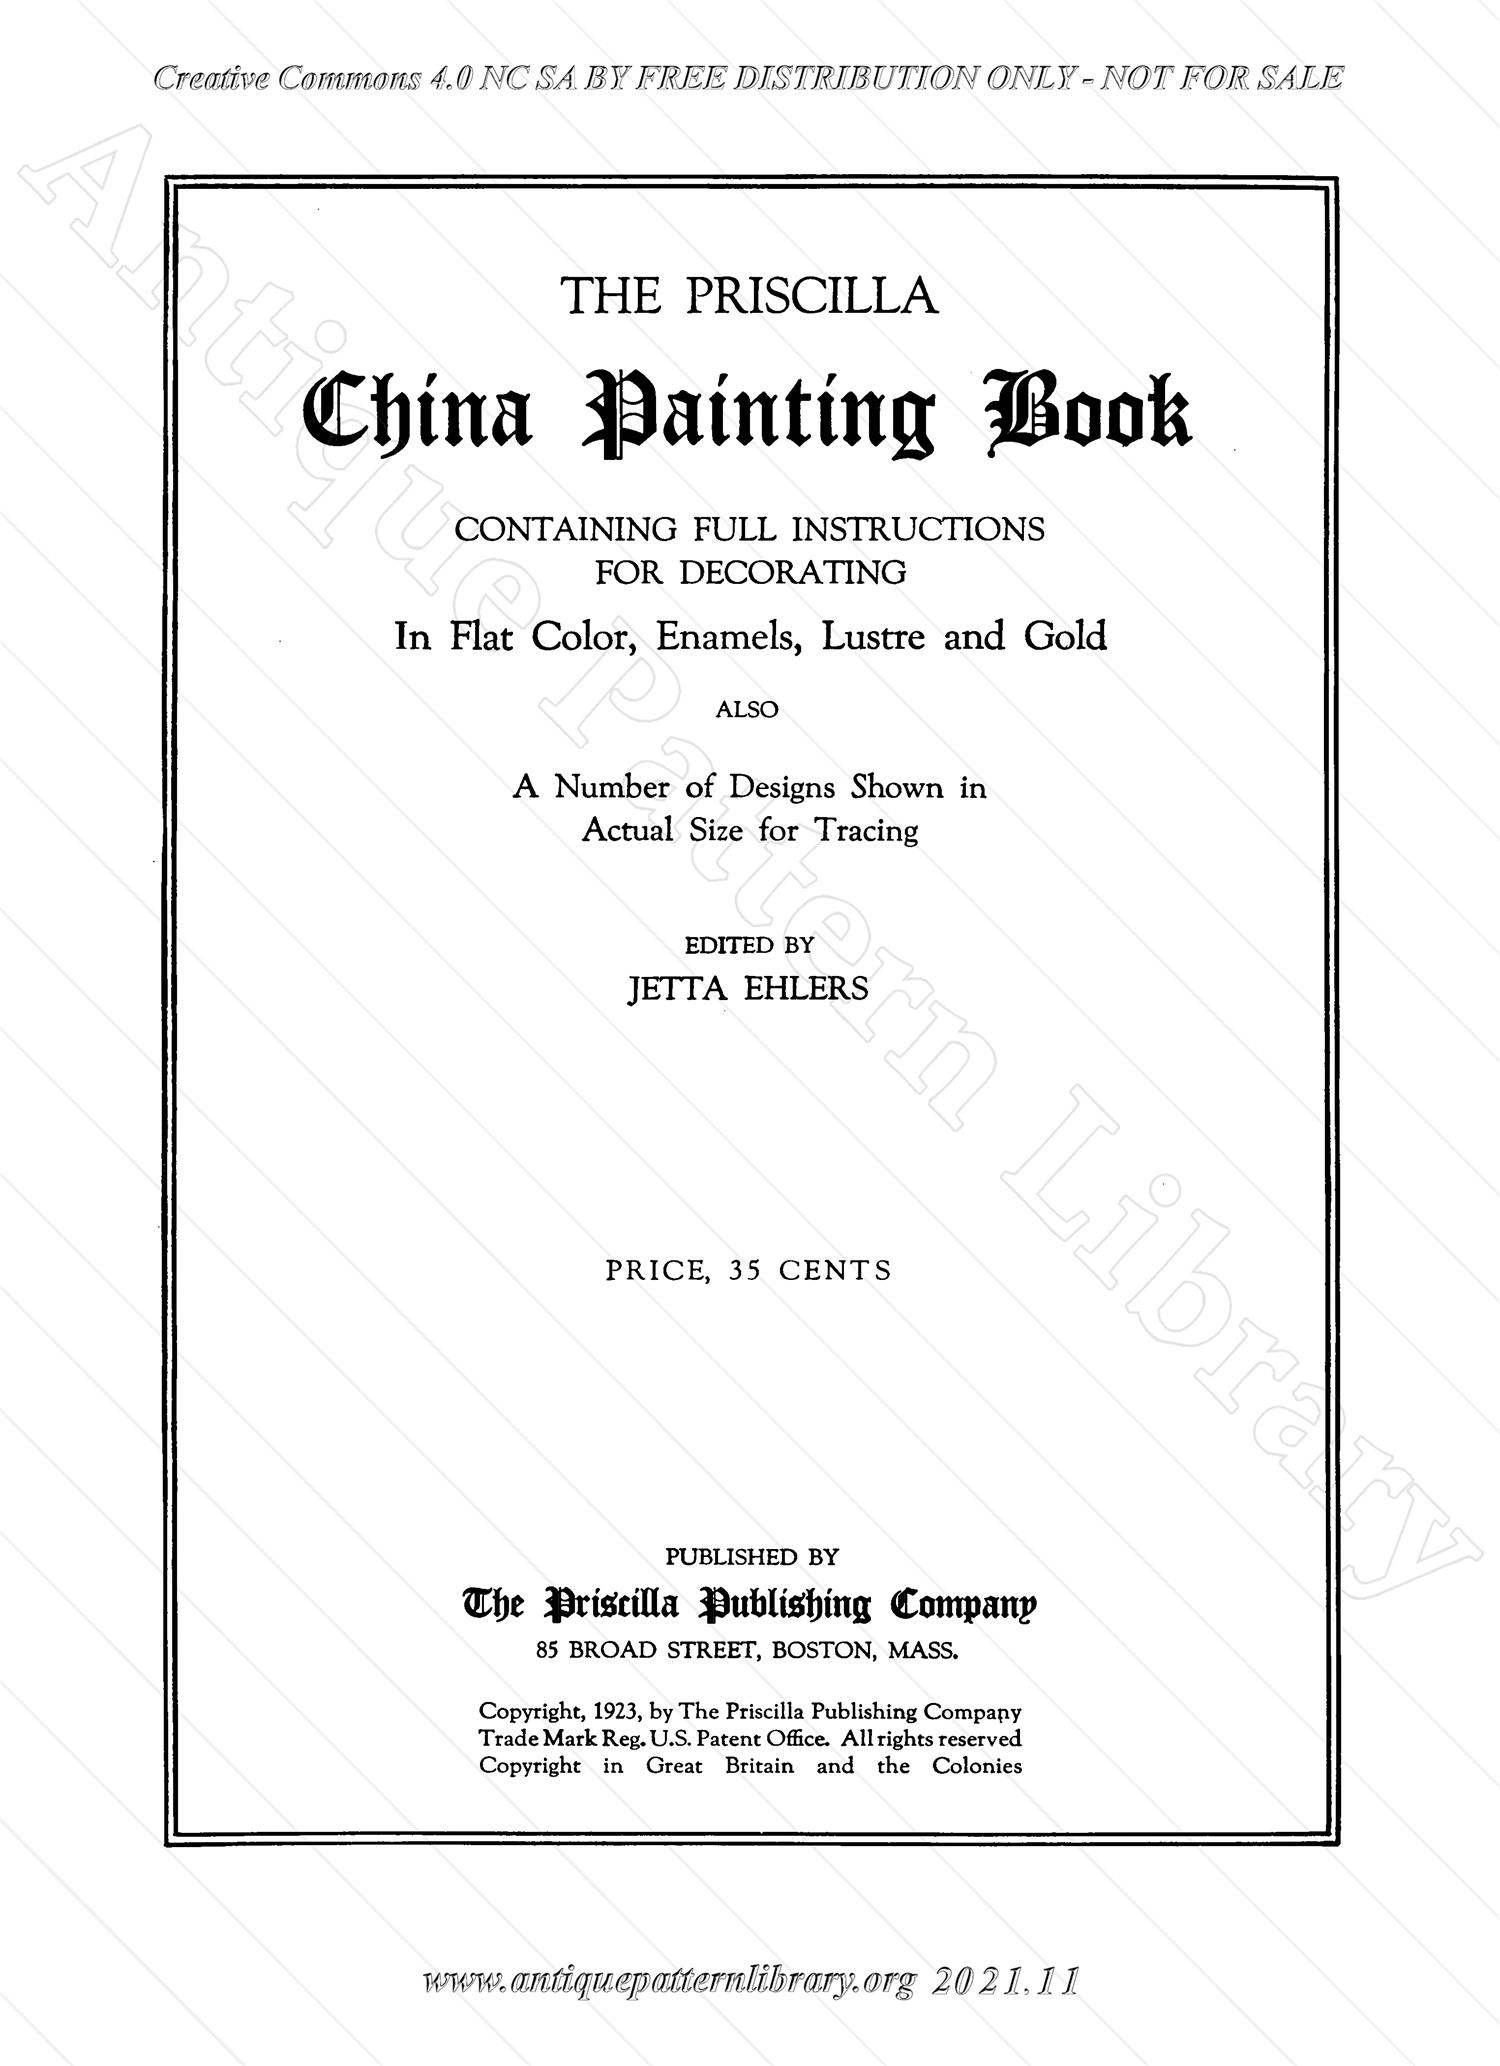 E-CL004 The Priscilla China Painting Book